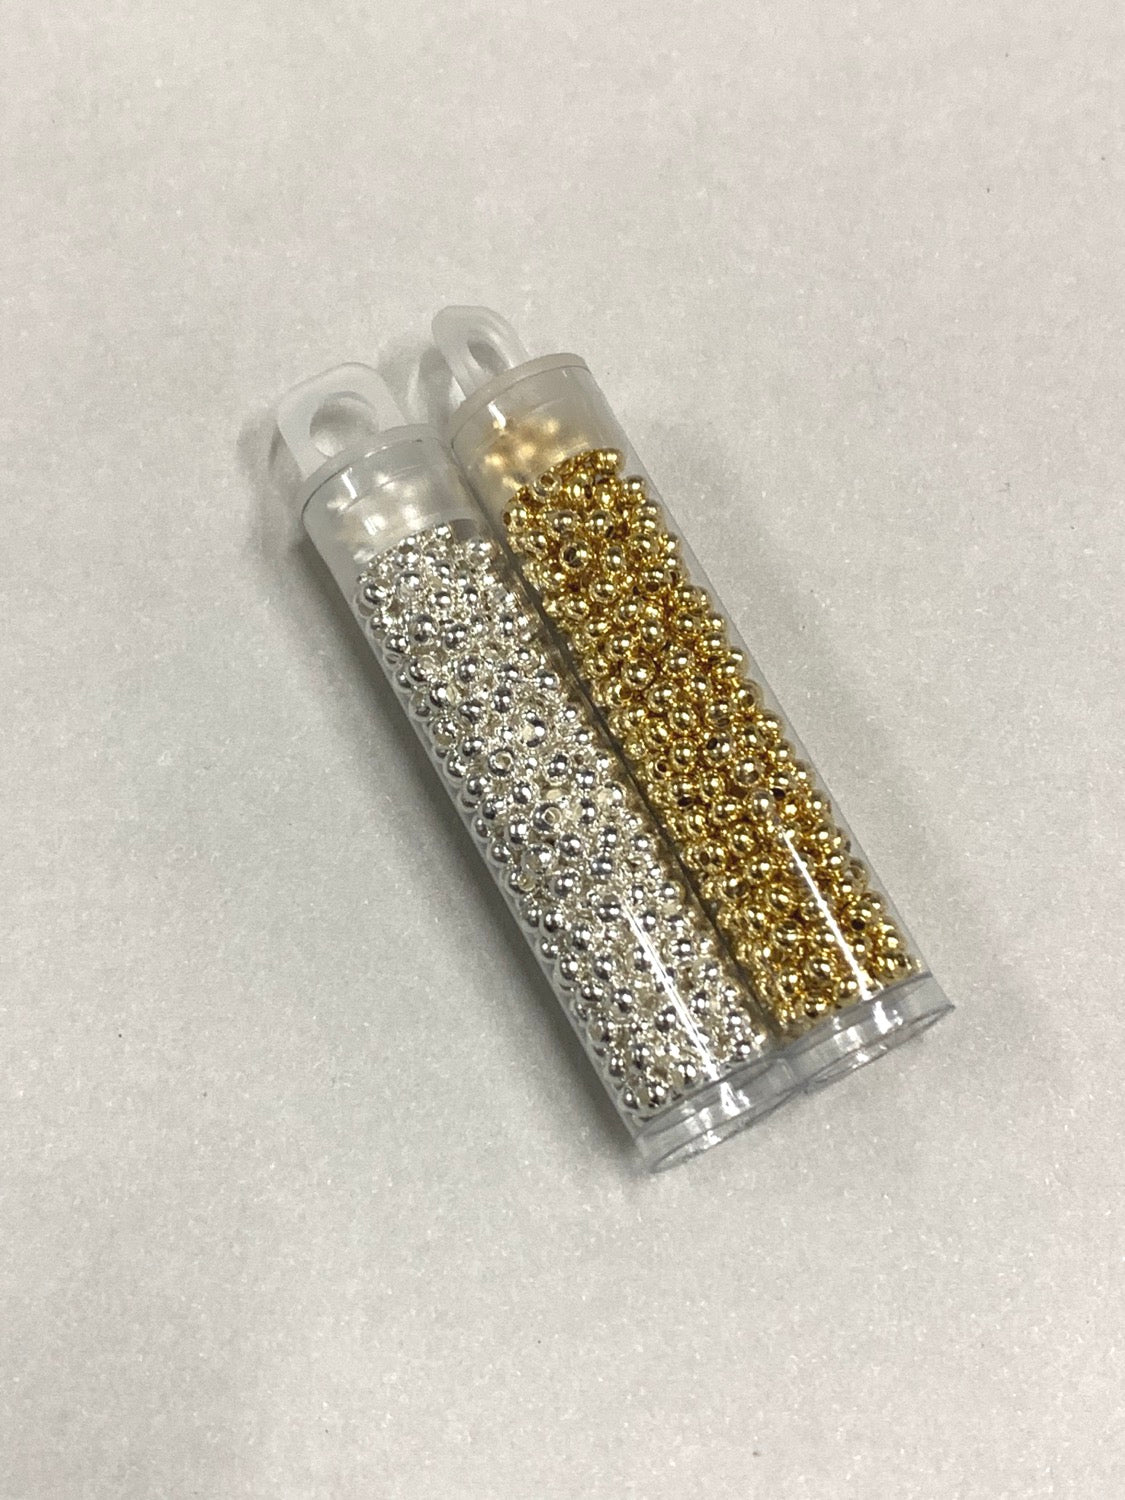 #8 seed beads tube 24k / Separador